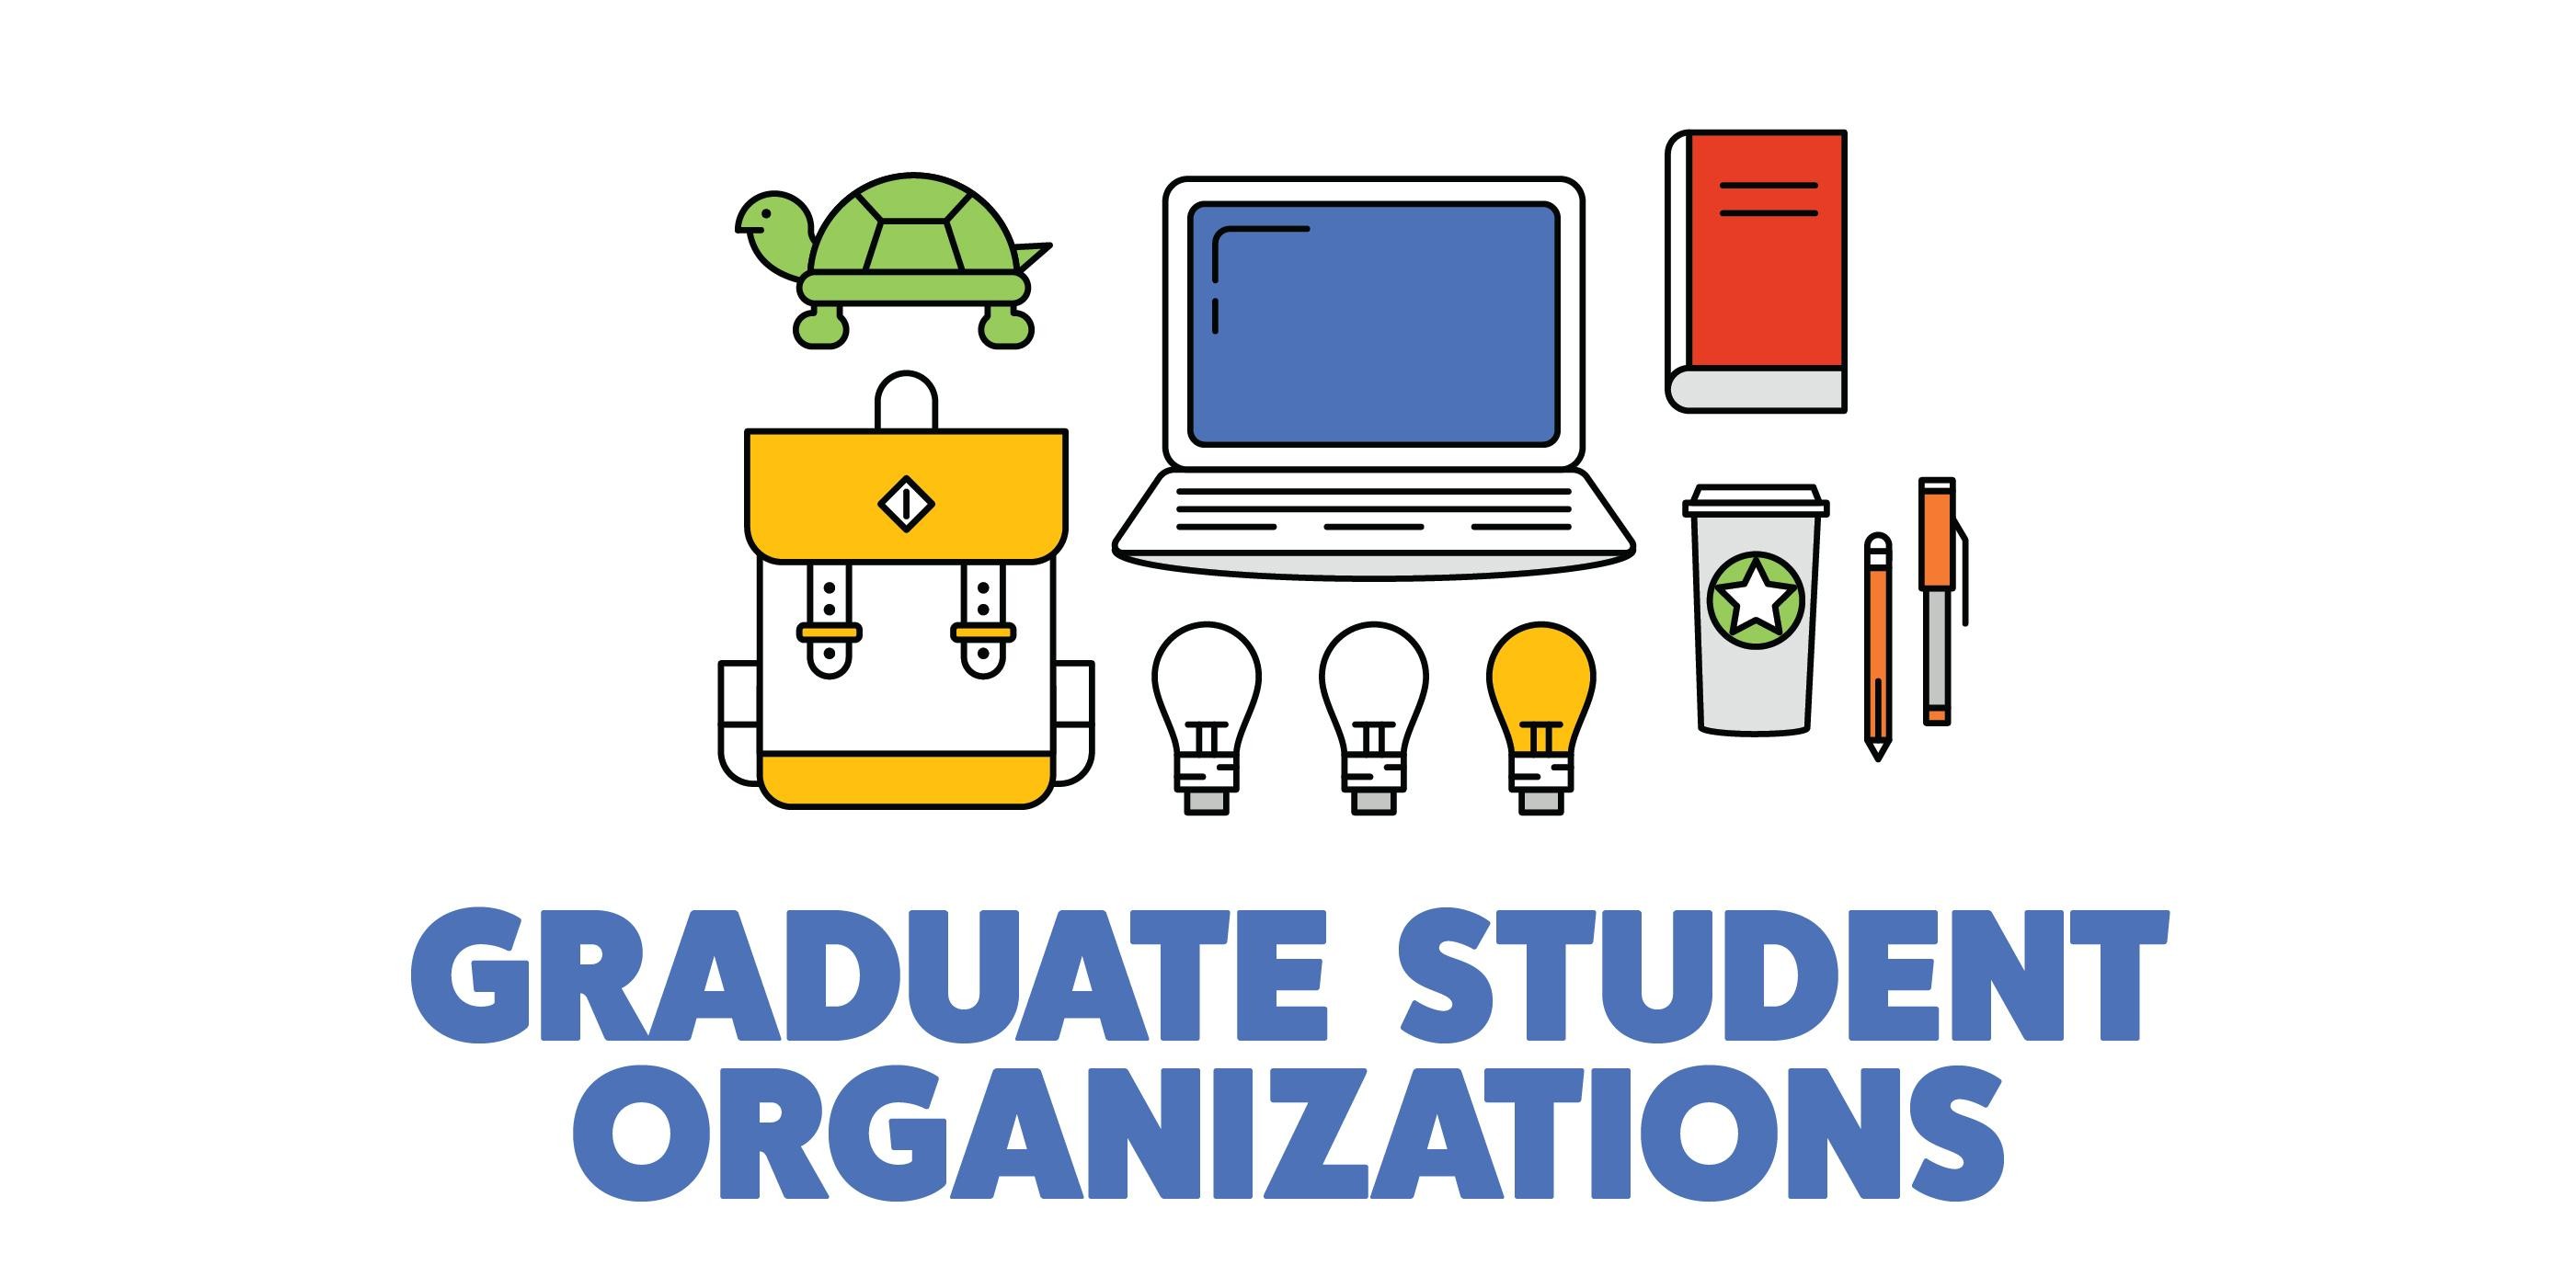 Graduate Student Organizations